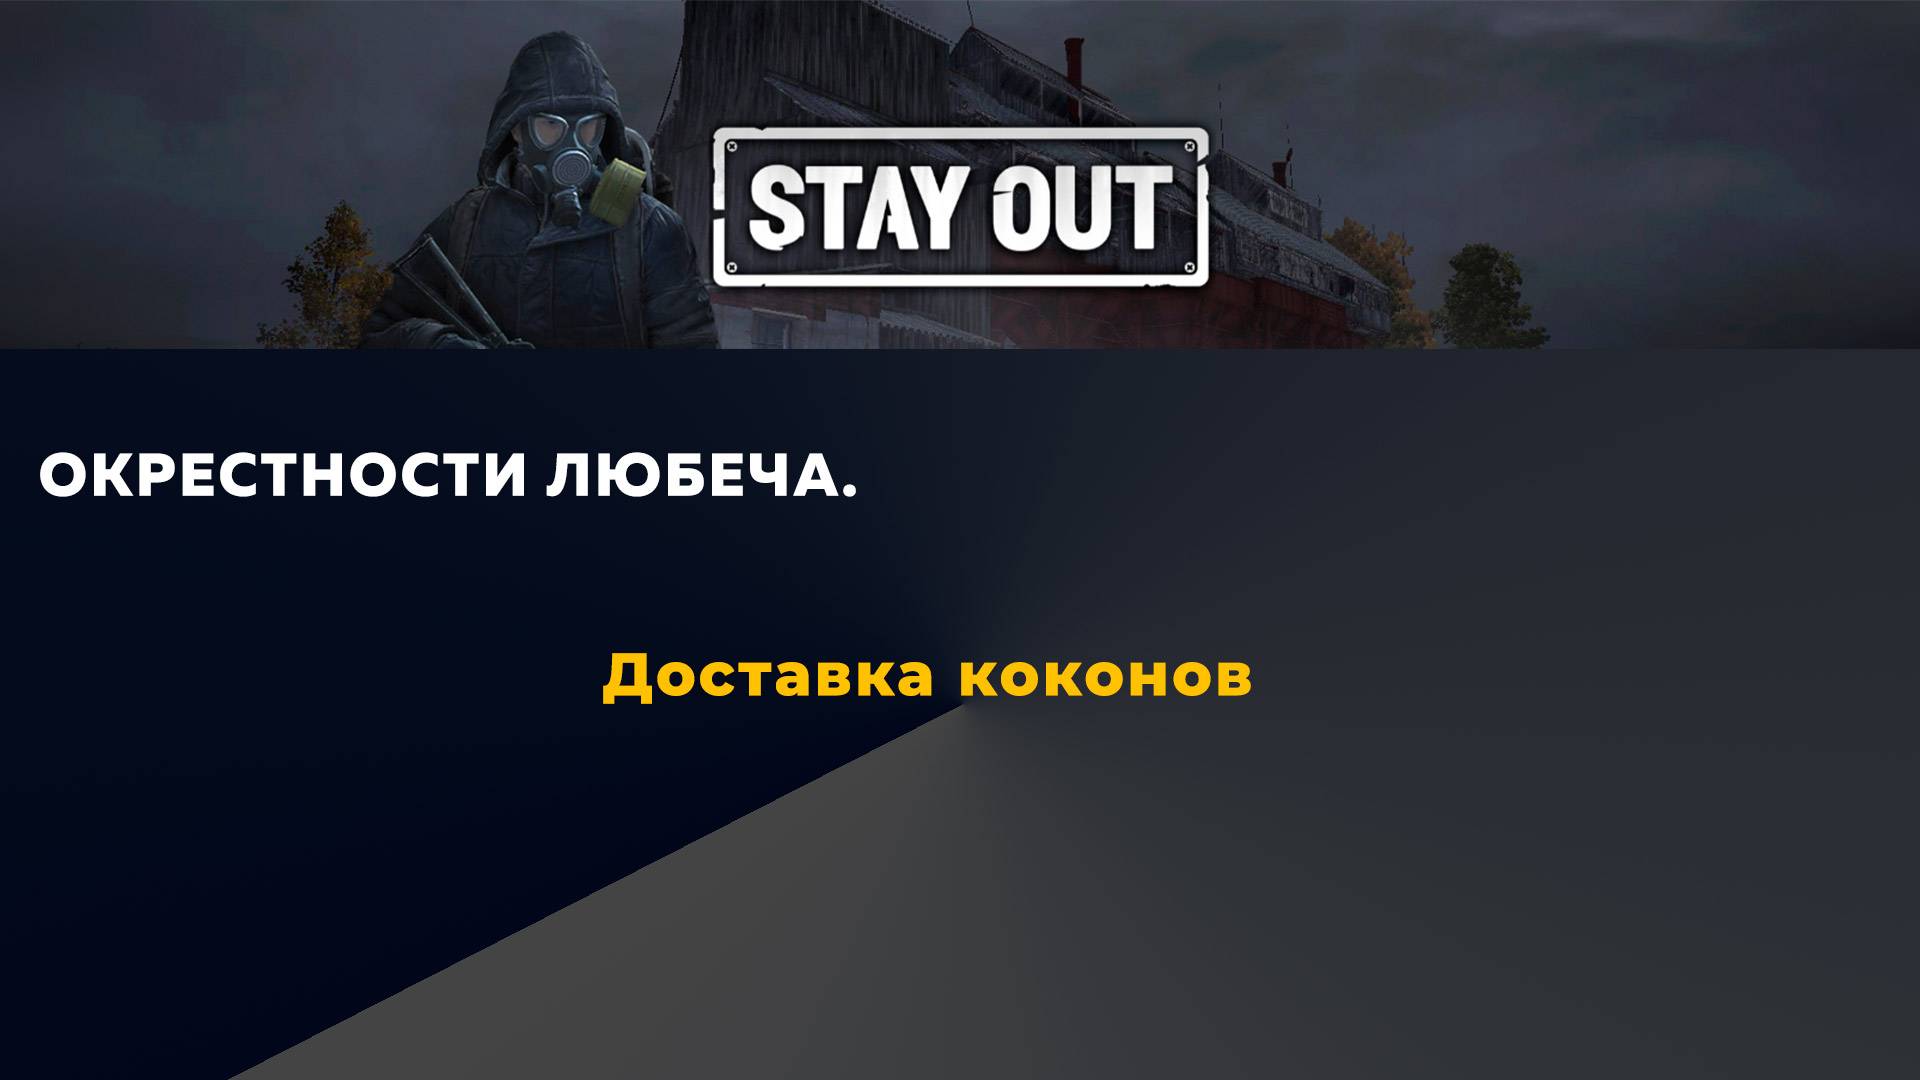 Stay Out_Доставка коконов